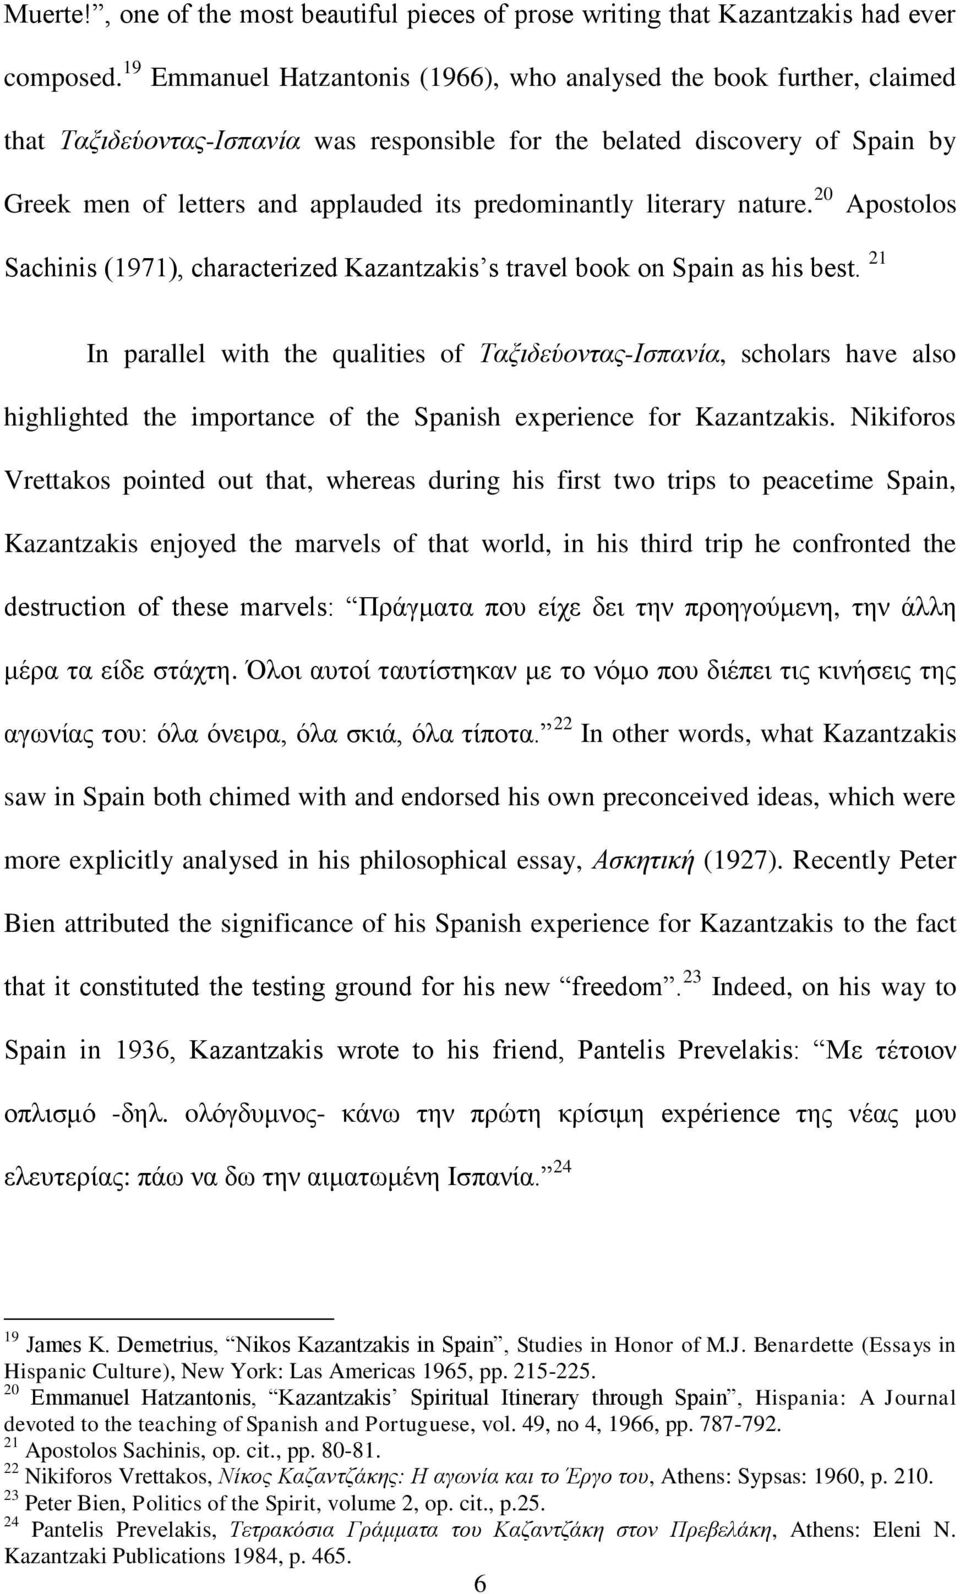 predominantly literary nature. 20 Apostolos Sachinis (1971), characterized Kazantzakis s travel book on Spain as his best.